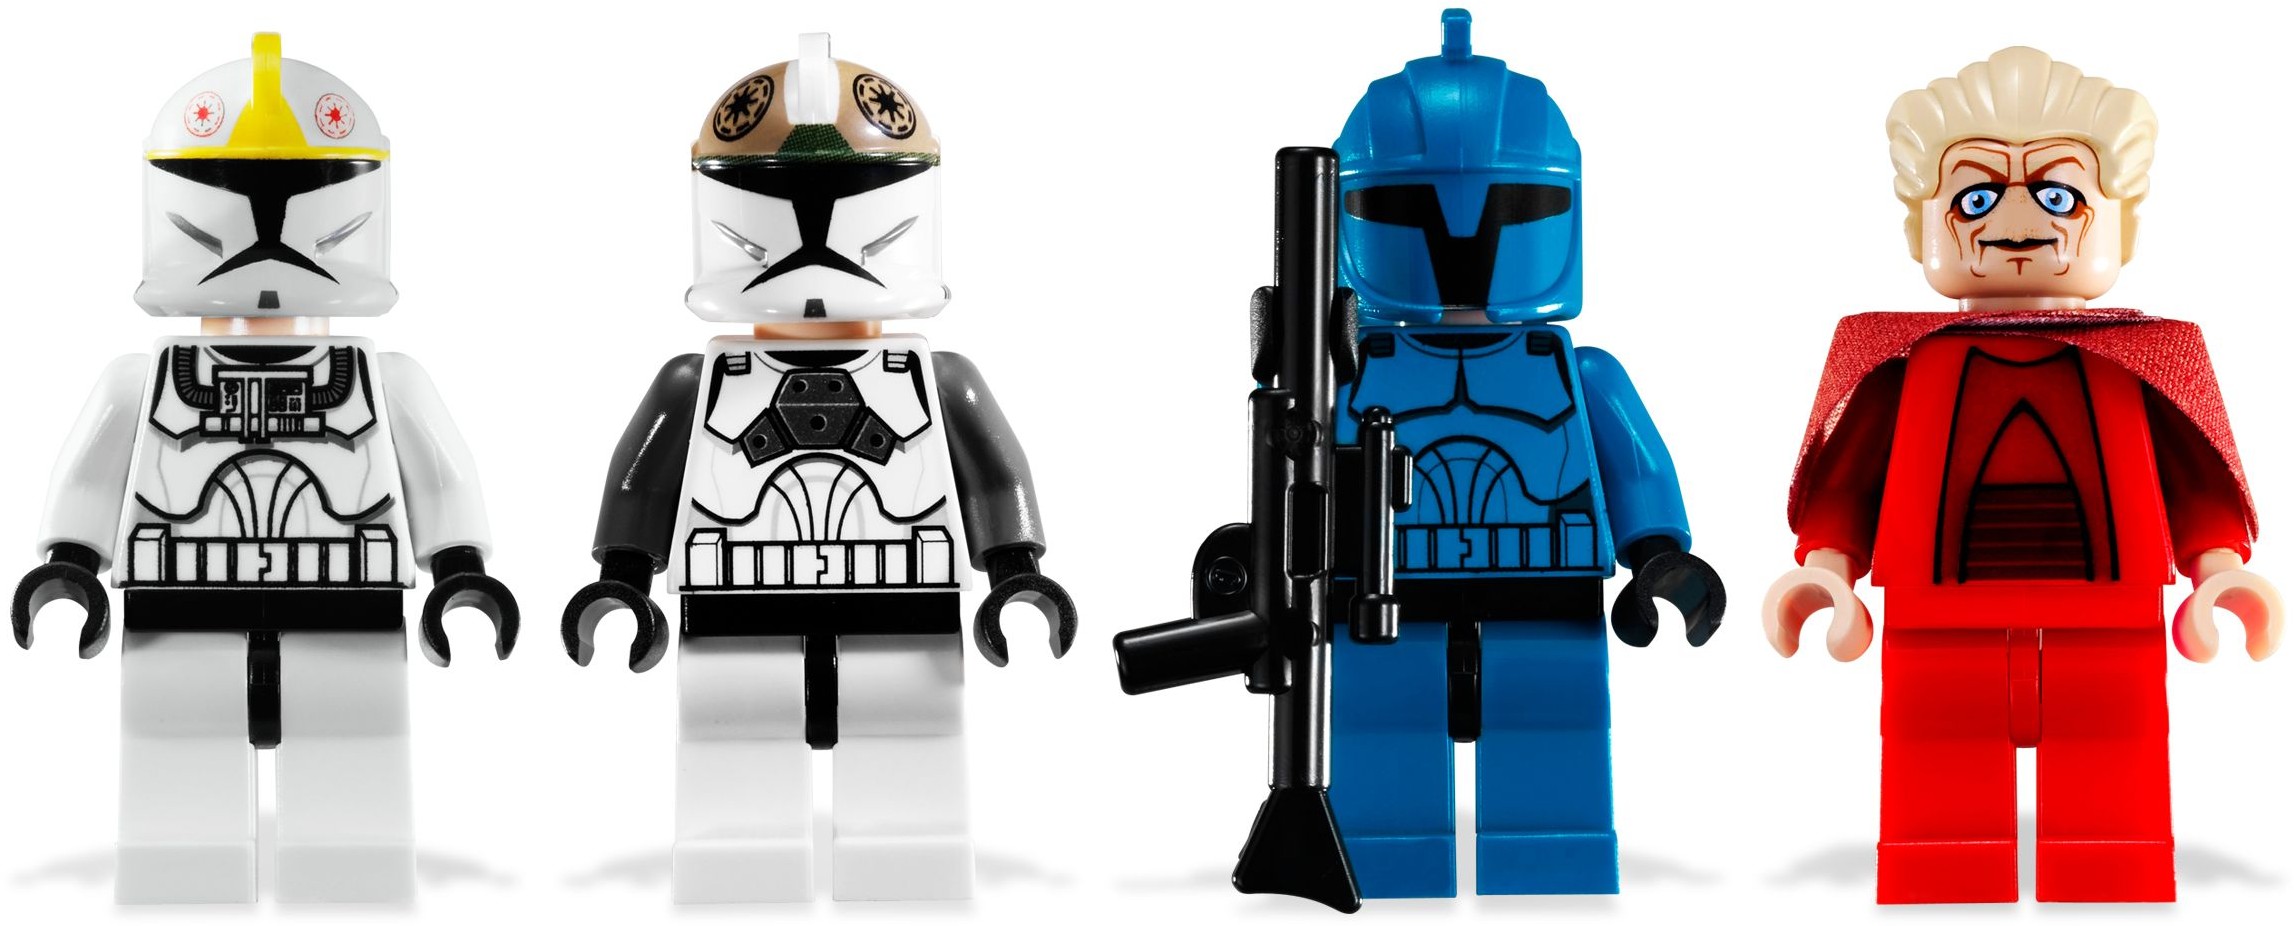 aspekt Sway Ballade Lego 8039 Venator-Class Republic Attack Cruiser - Lego Star Wars set for  sale best price